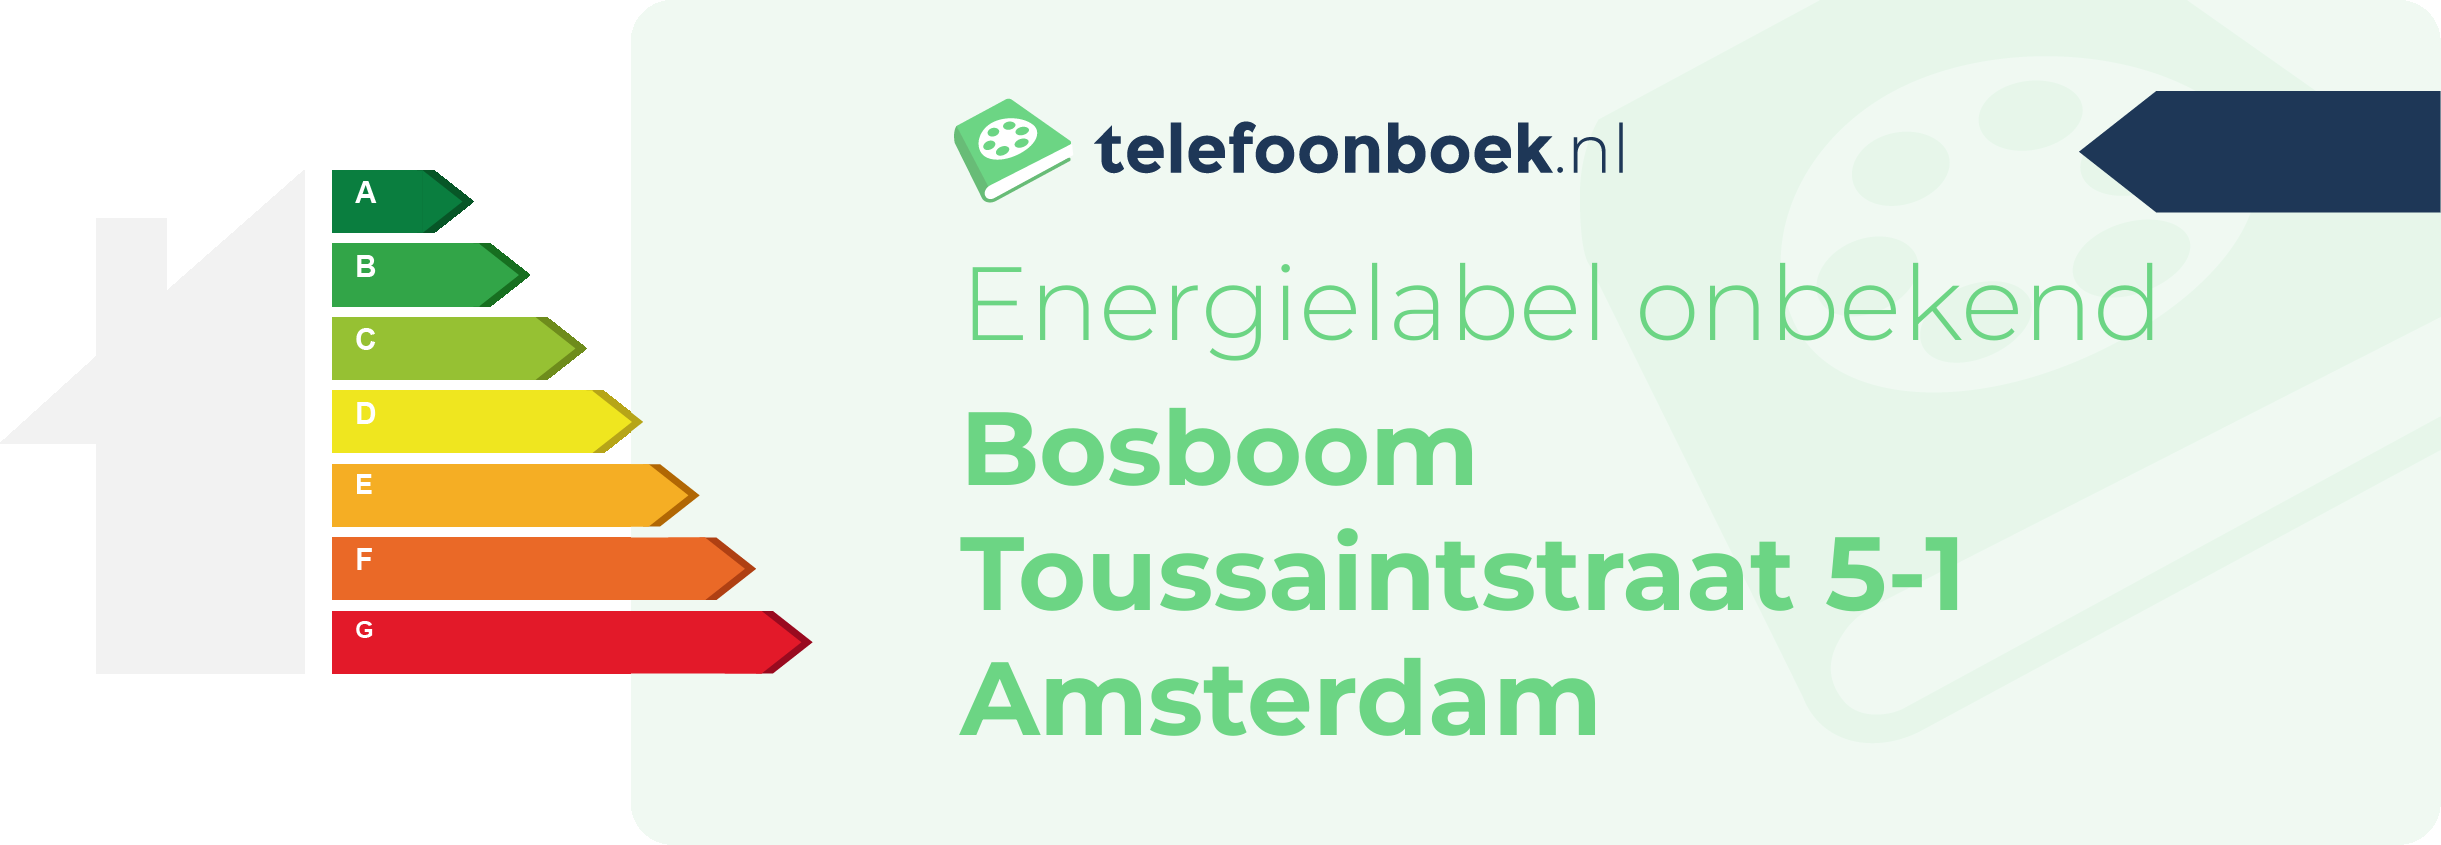 Energielabel Bosboom Toussaintstraat 5-1 Amsterdam